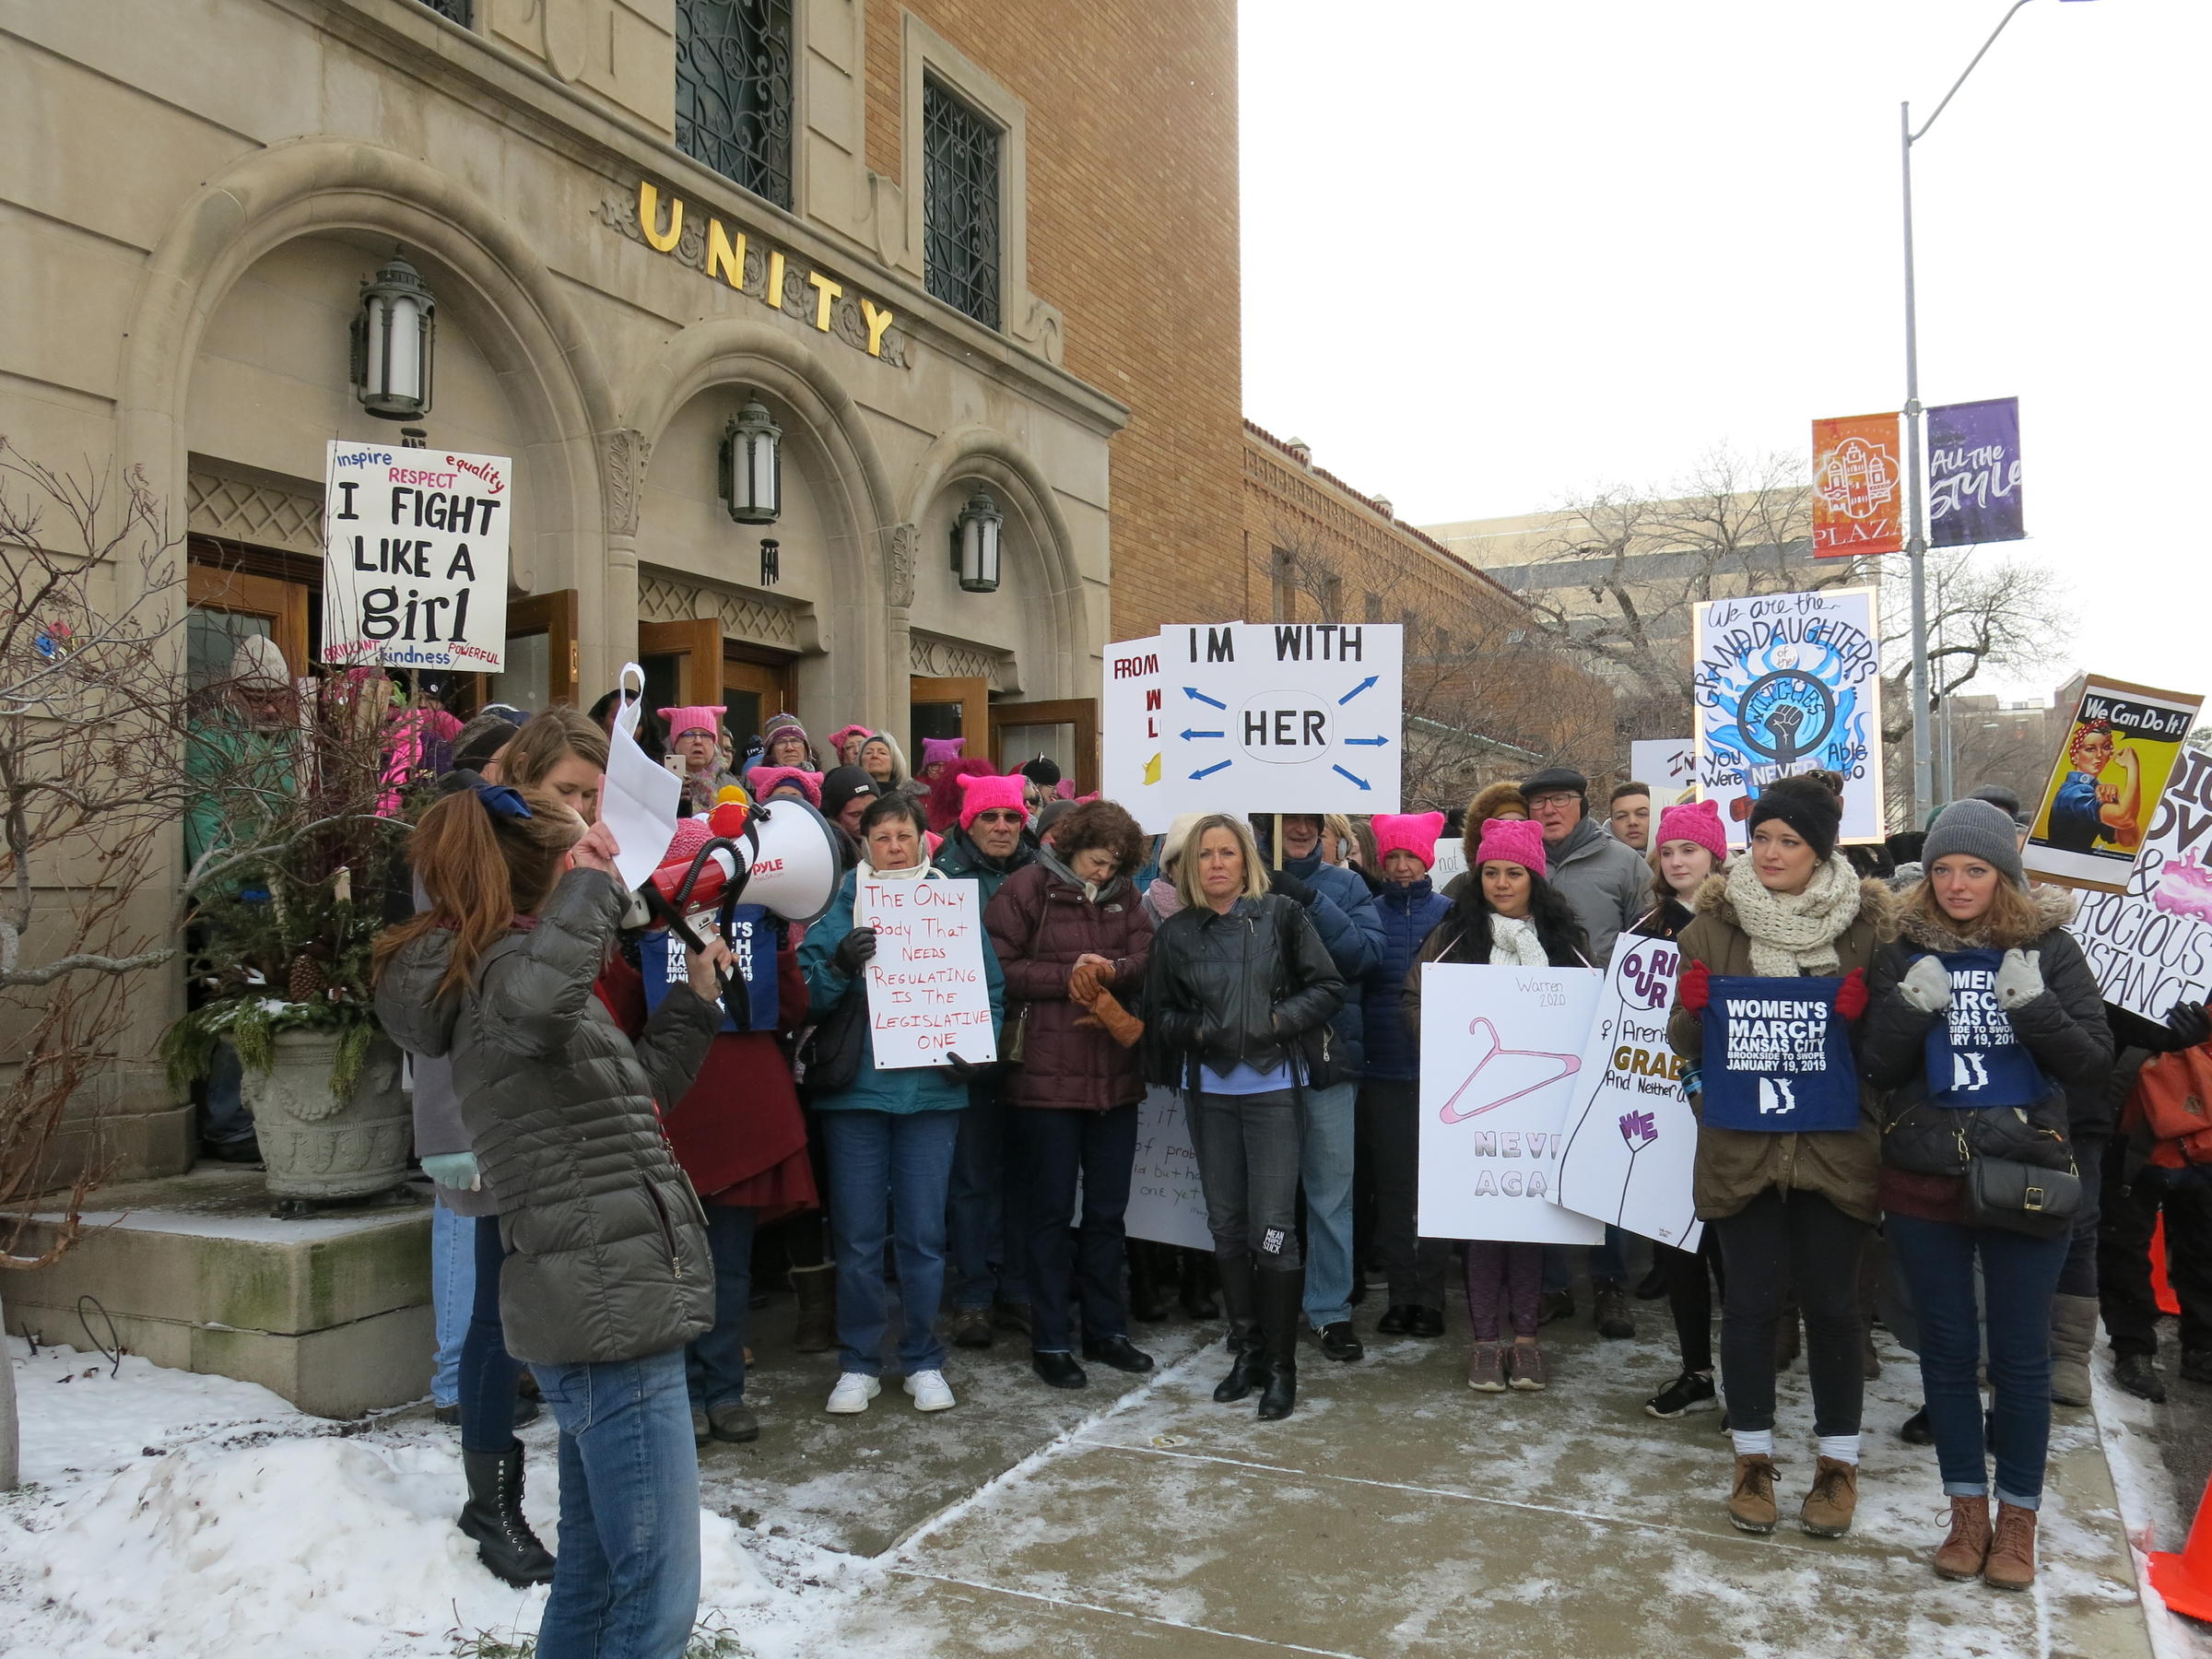 Kansas City Women's March Focuses On Empowerment, Not Trump KBIA